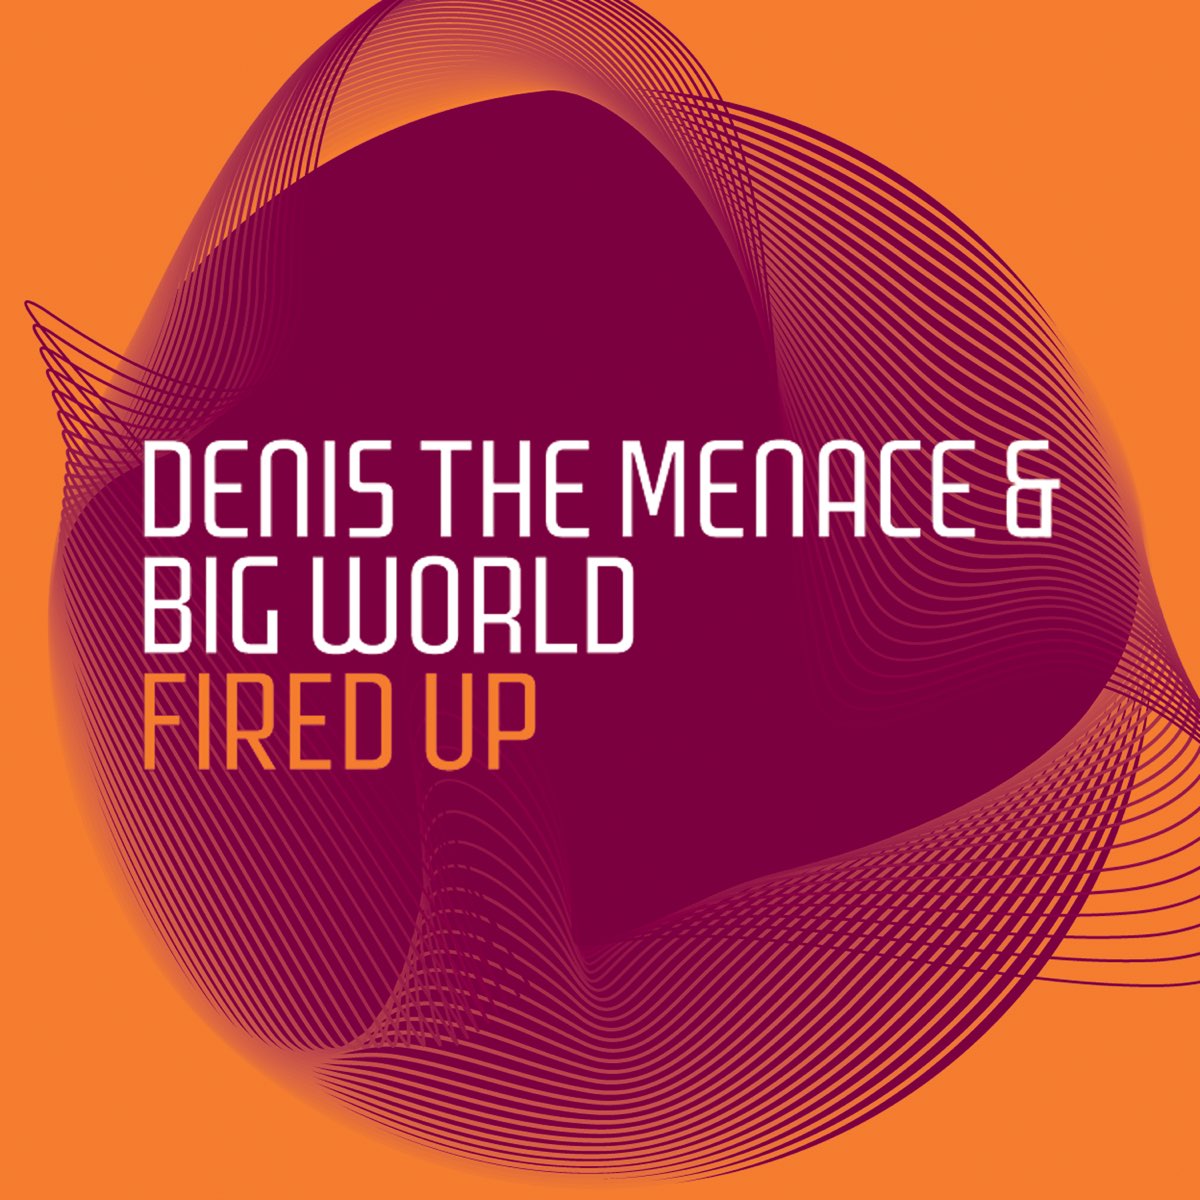 Big World & Denis the Menace. Denis the Menace & big World - show me a reason (Terrace Mix) текст. Big World & Denis the Menace show. Биг Биг ворлд песня. Show me a reason denis the menace